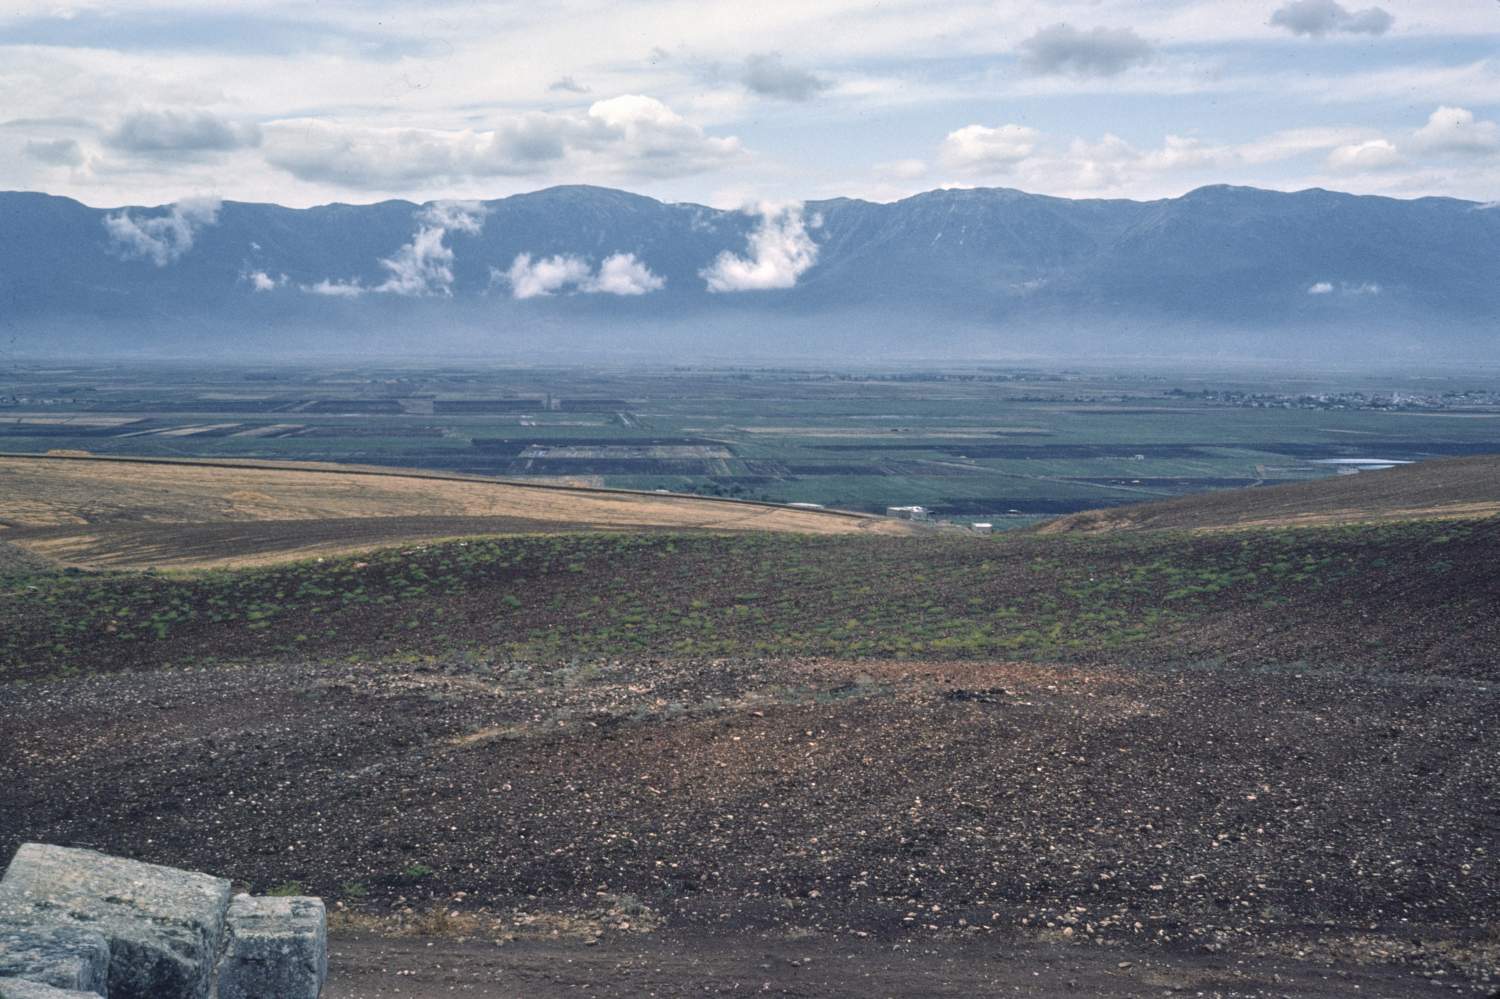 View west over Ghab Valley toward Ansariyya Mountain Range beyond.